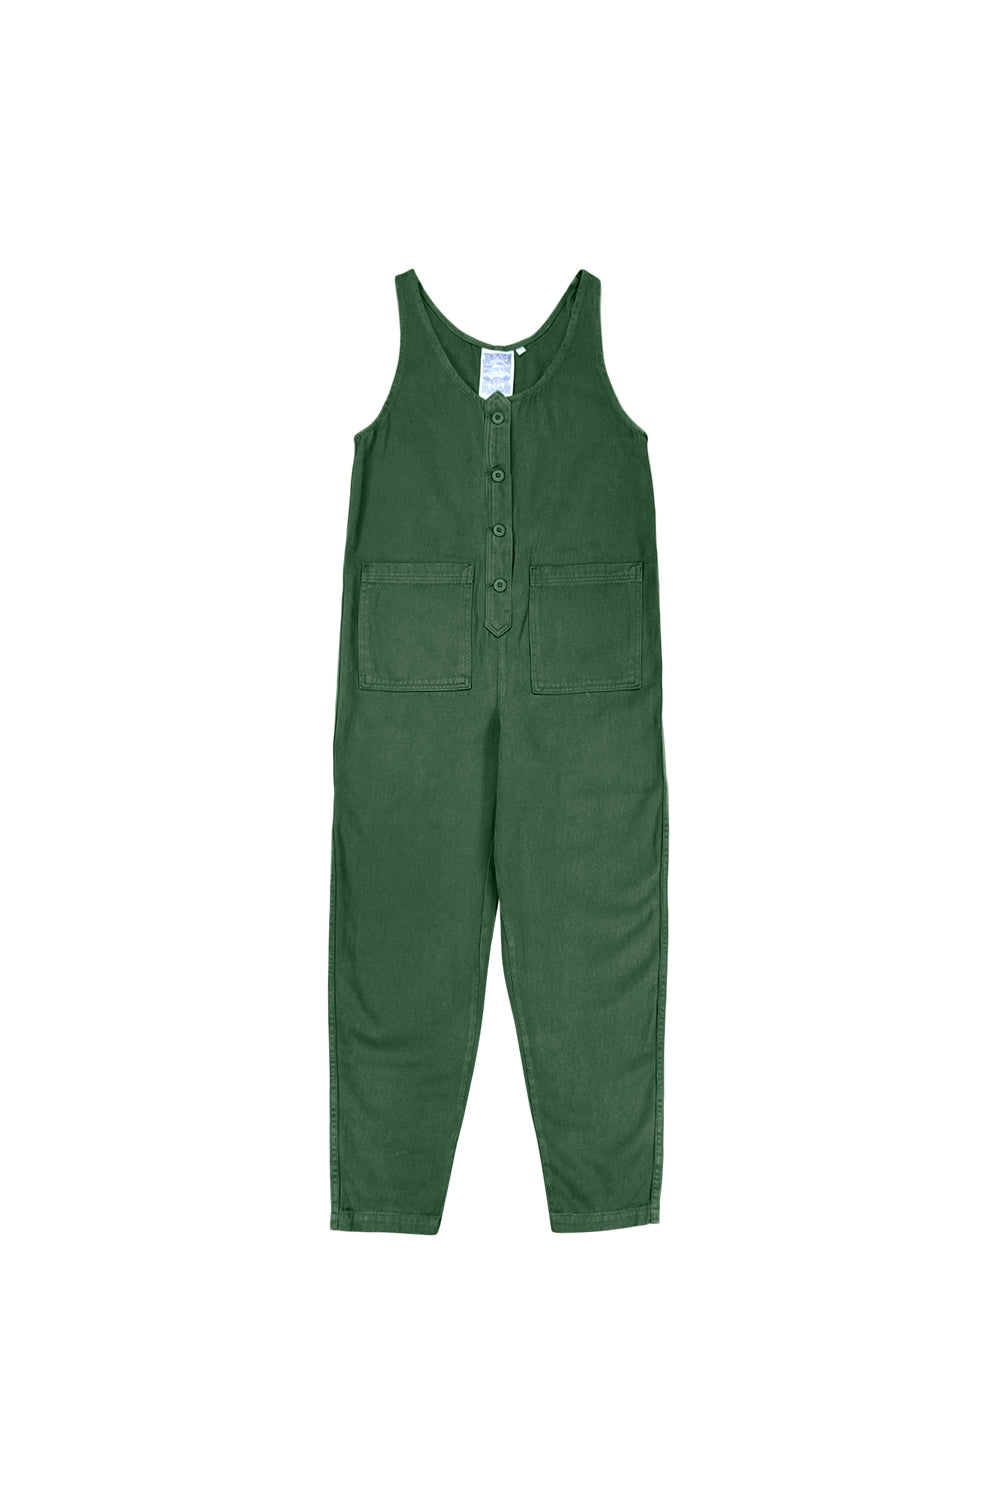 Button Front Jumper | Jungmaven Hemp Clothing & Accessories / Color: Hunter Green